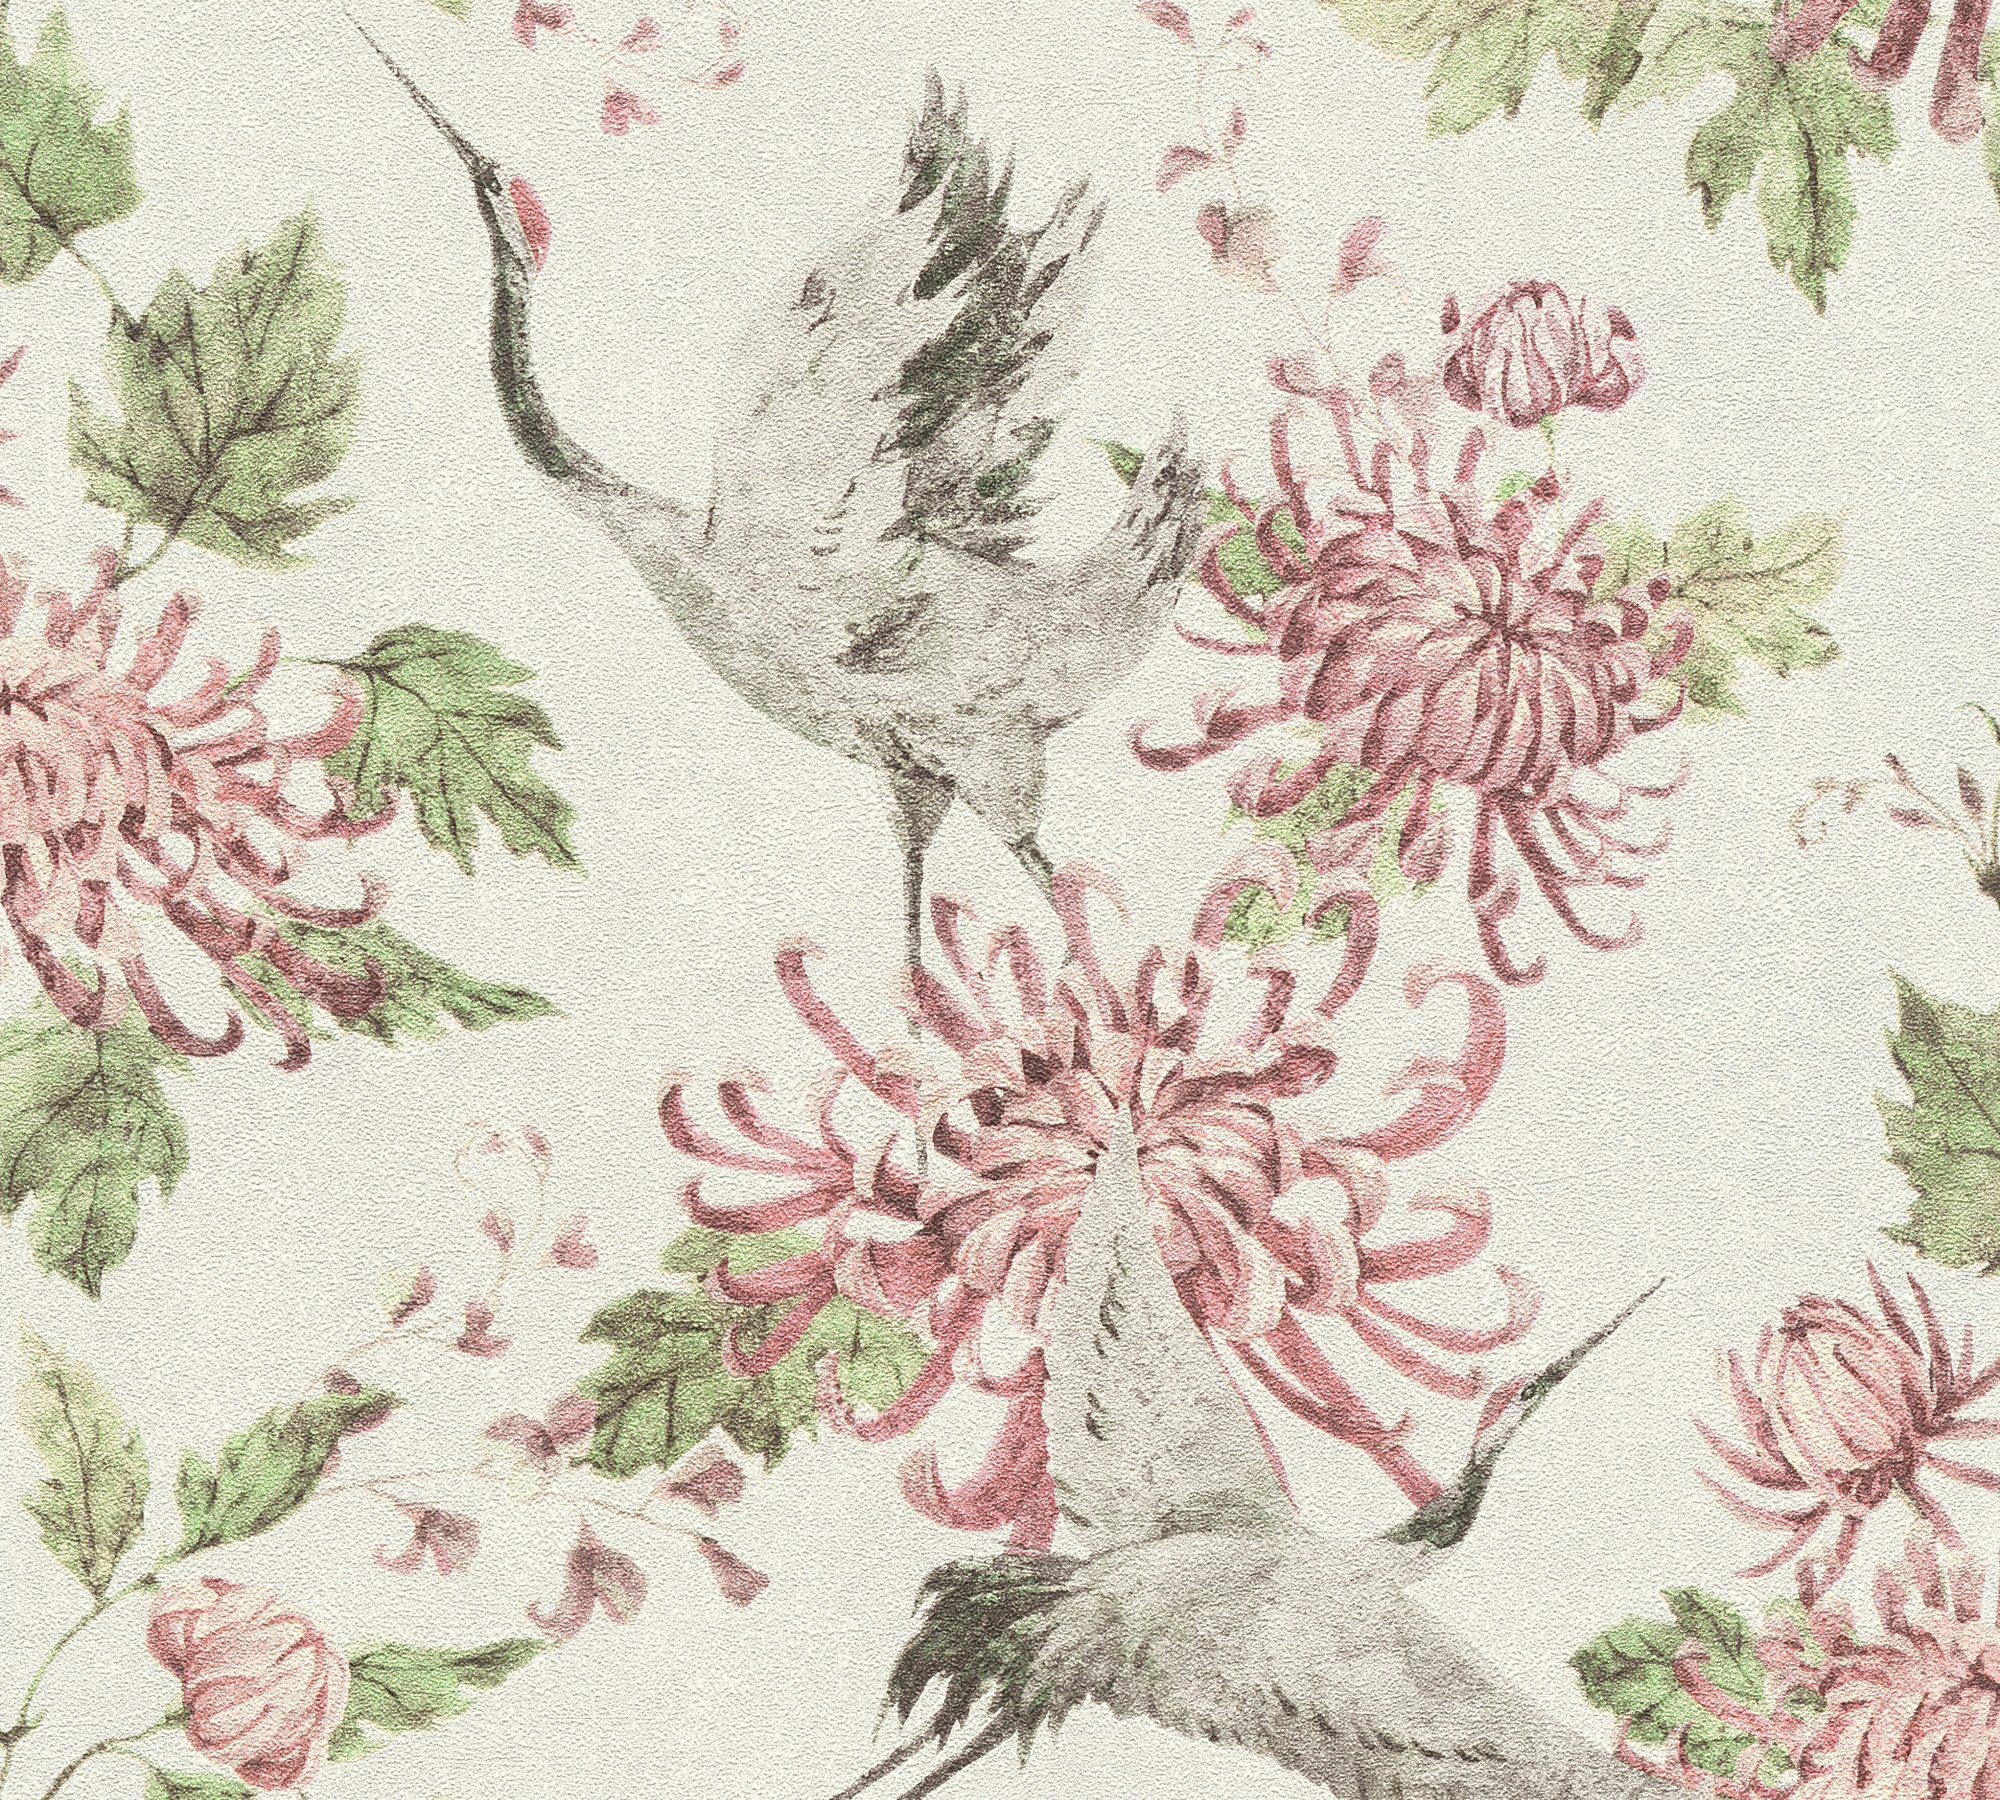 Fusion, Création weiß/rose/grün print, Vliestapete floral, geprägt, A.S. Tapete Asian Japanisch animal Vogeltapete